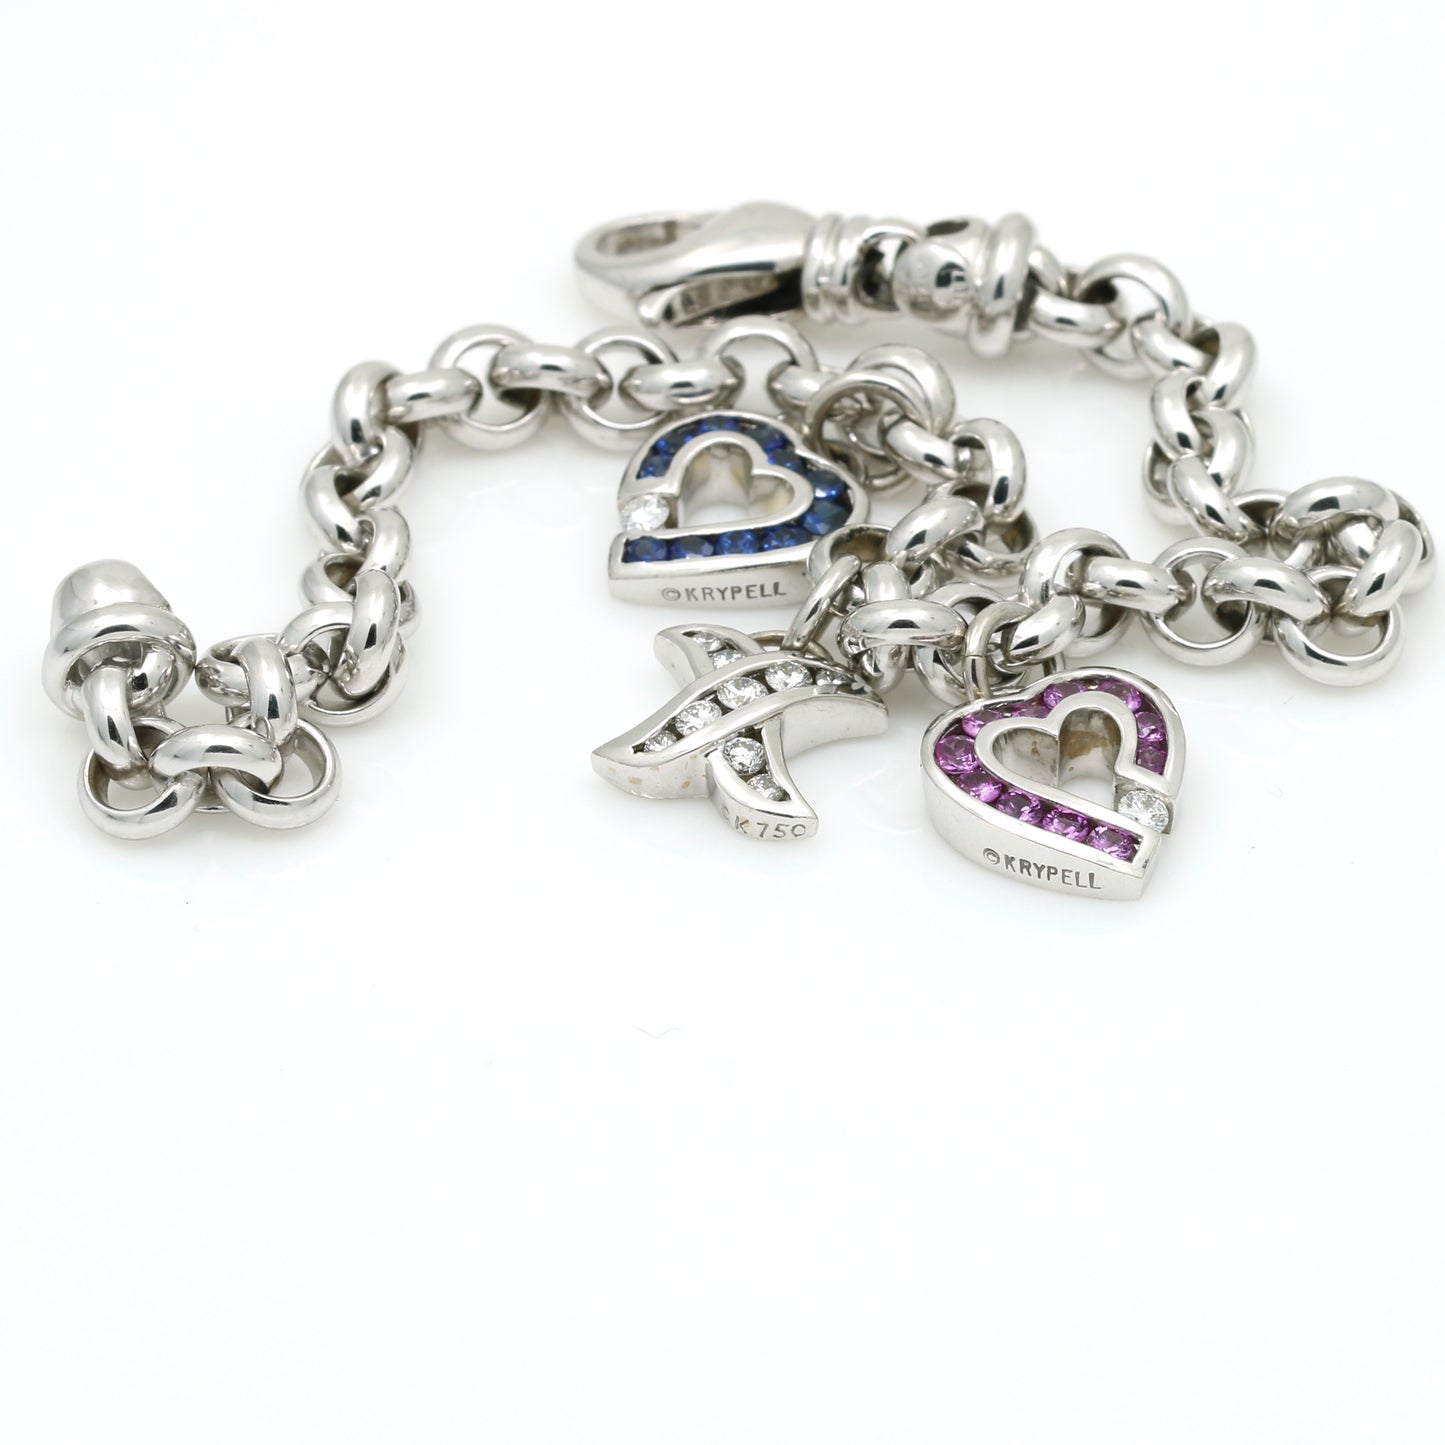 Charles Krypell Sapphire Diamond Charm Bracelet - 18k White Gold - Pink and Blue